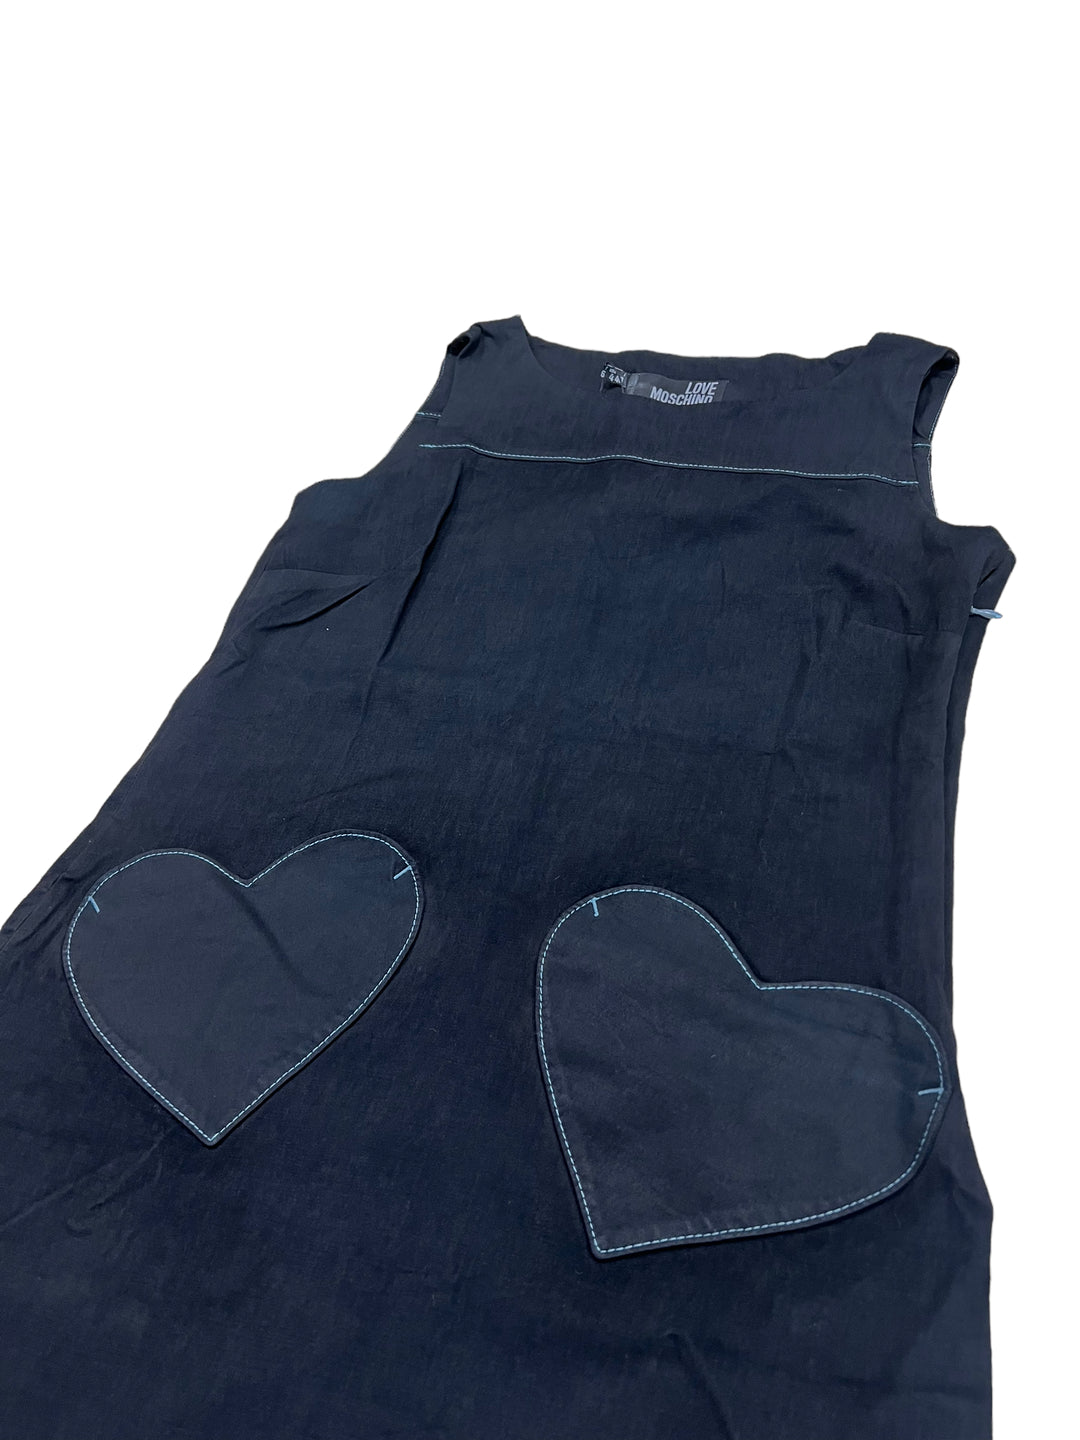 Love Moschino heart motif Mini Dress Women’s S/M